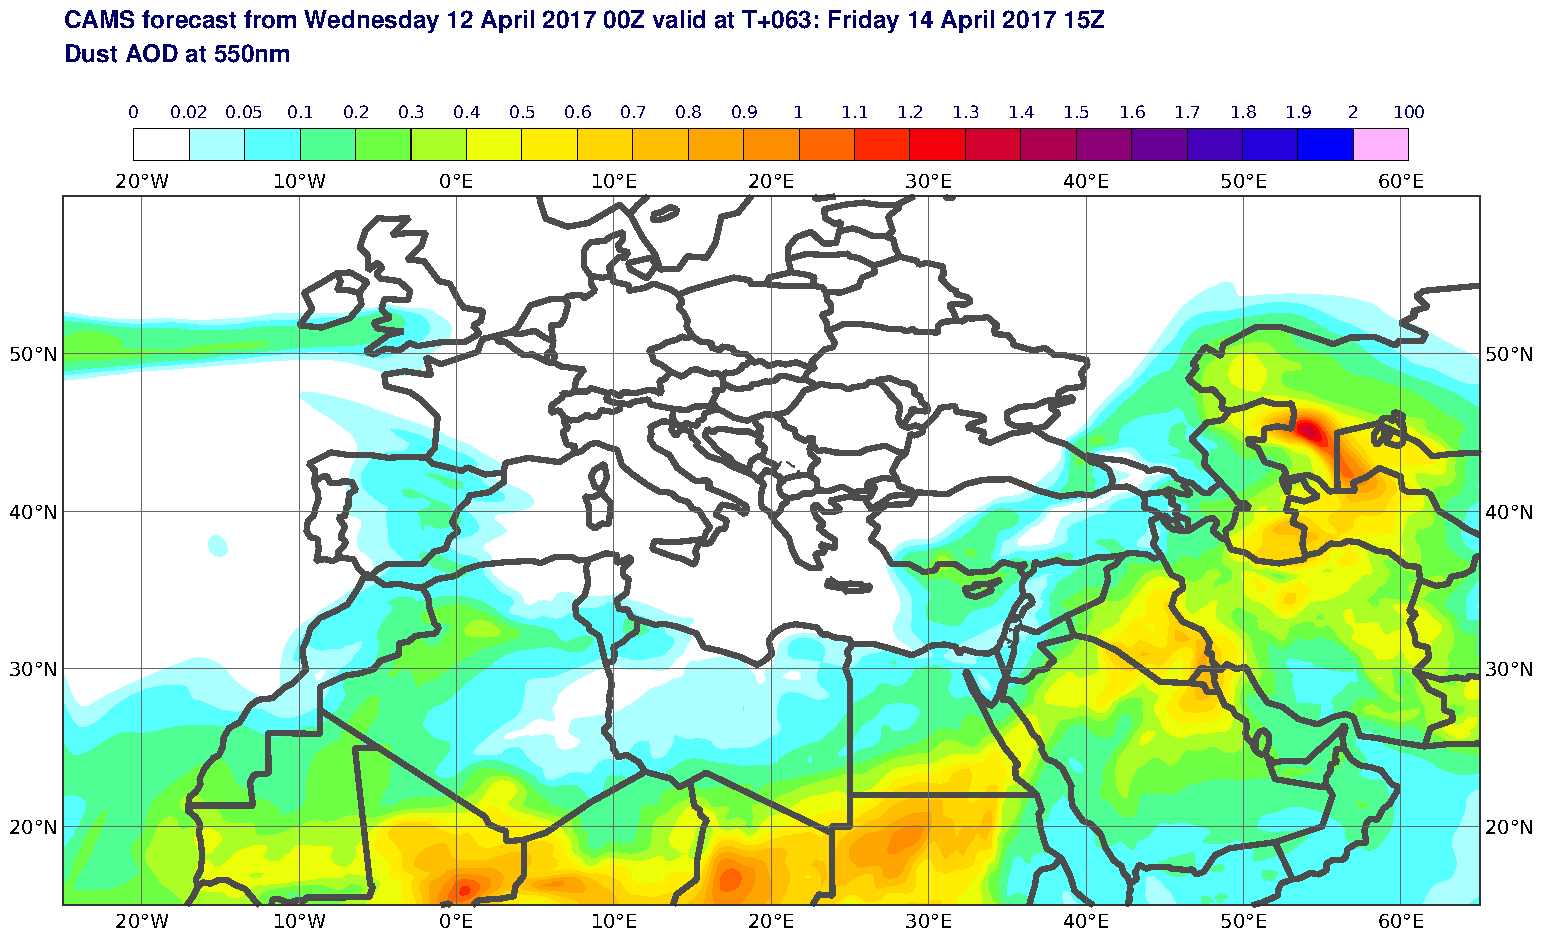 Dust AOD at 550nm valid at T63 - 2017-04-14 15:00